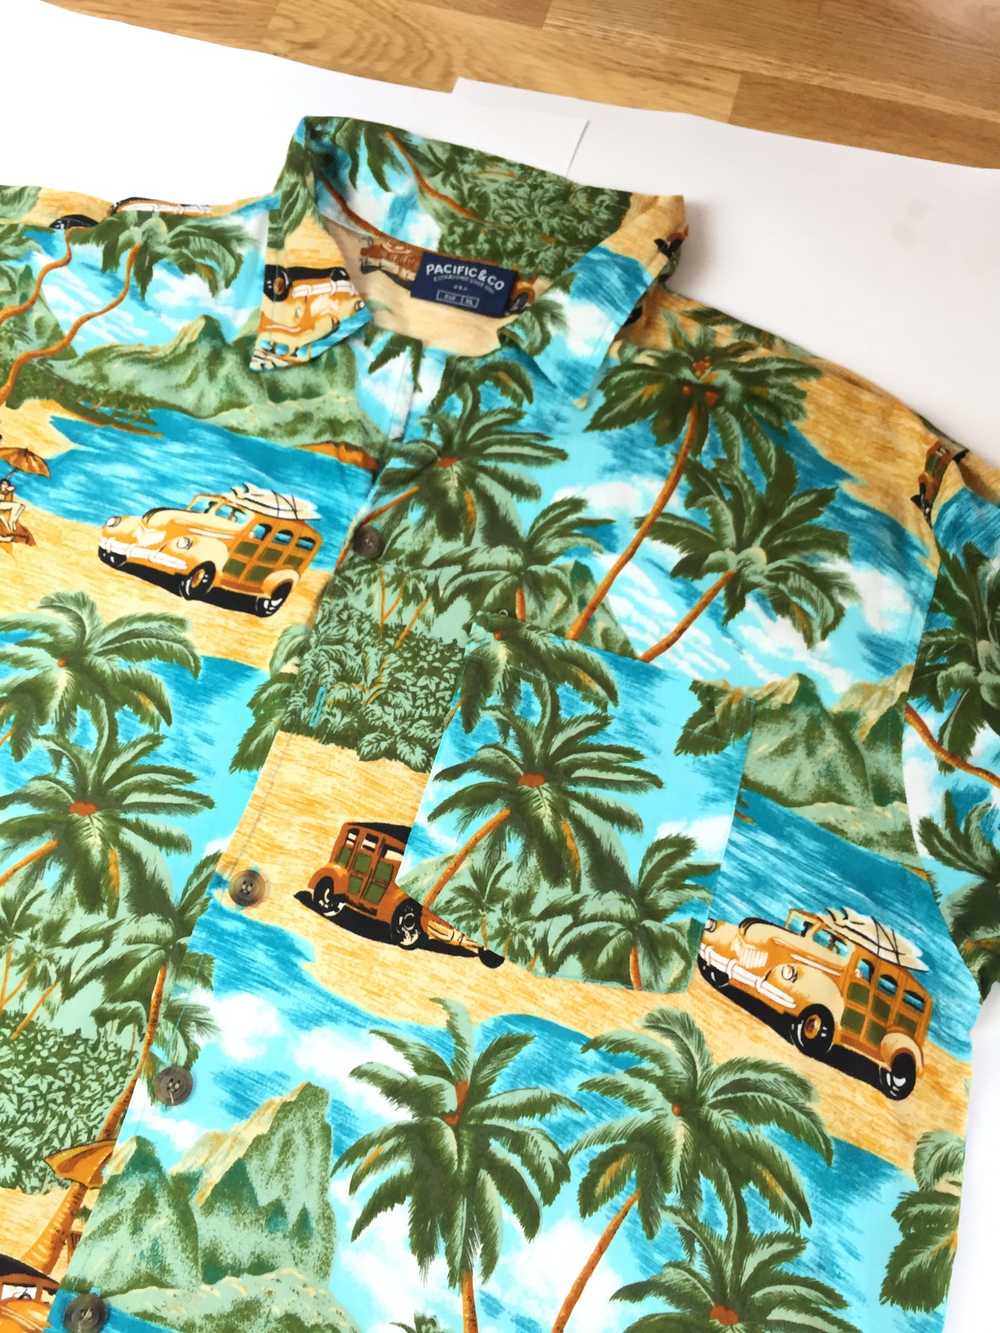 Pacific & Co Hawaiian Shirt cejerowski cars palm - image 1